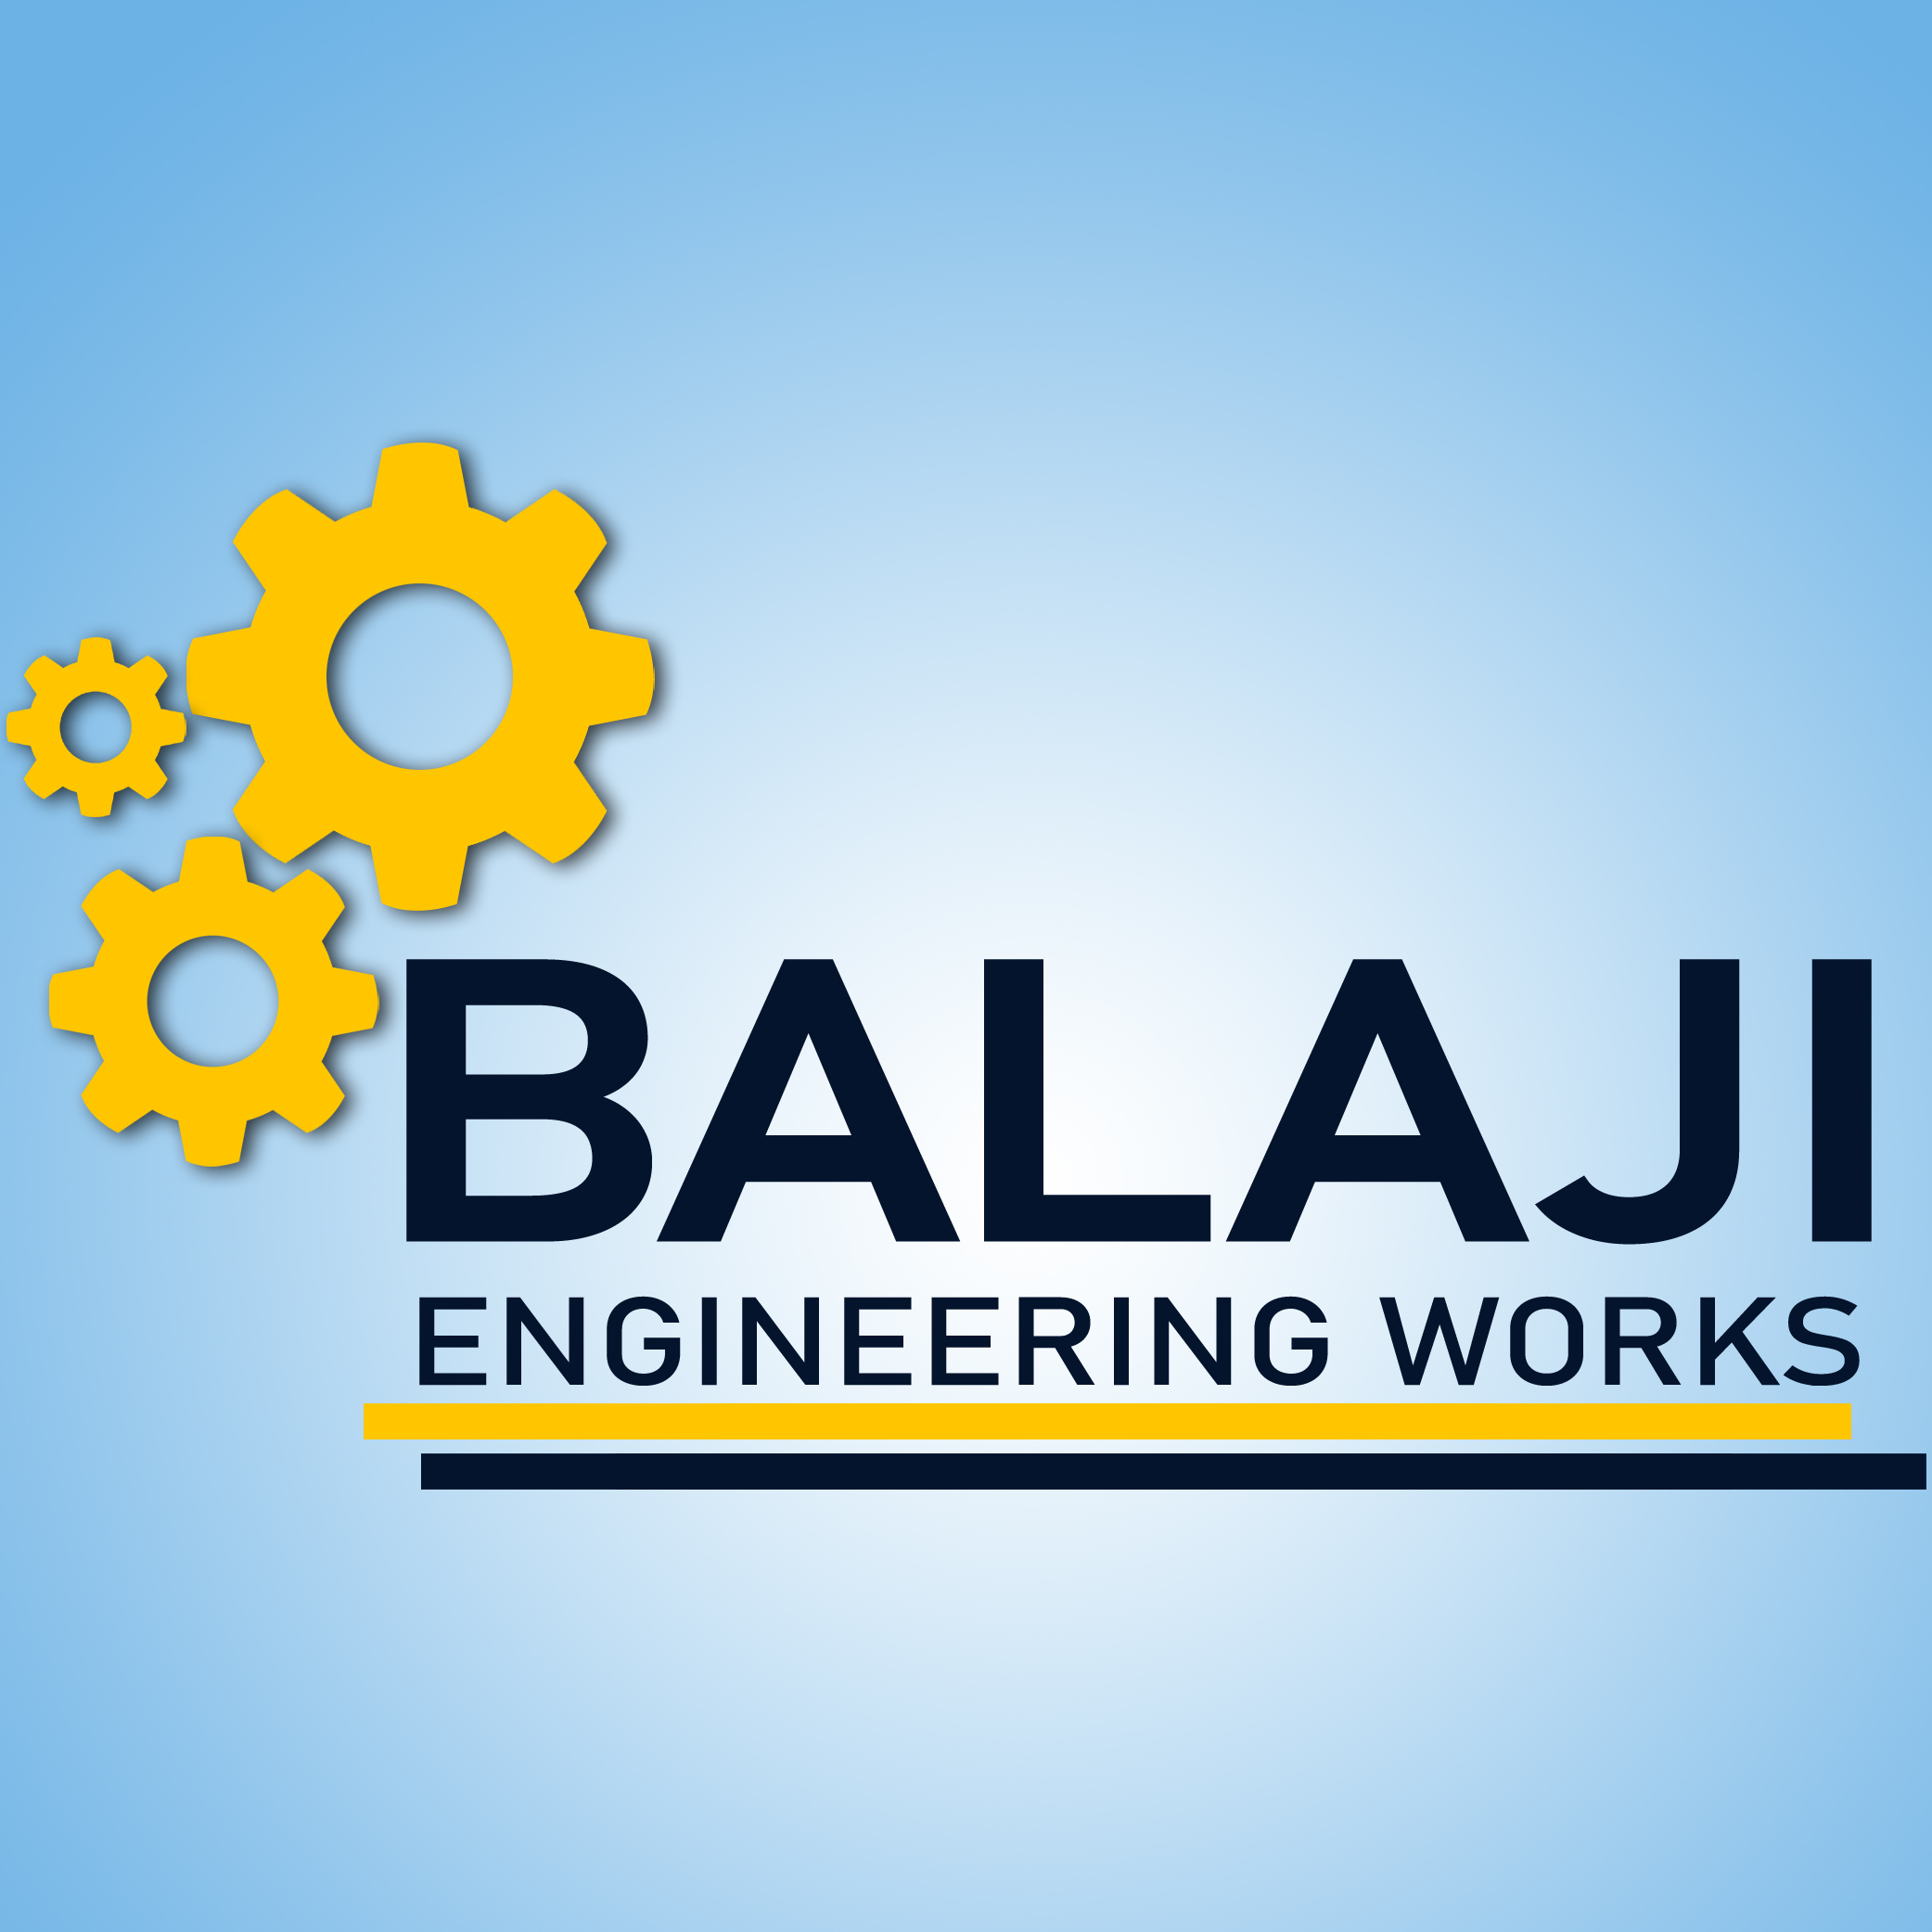 Balaji Engineering Works